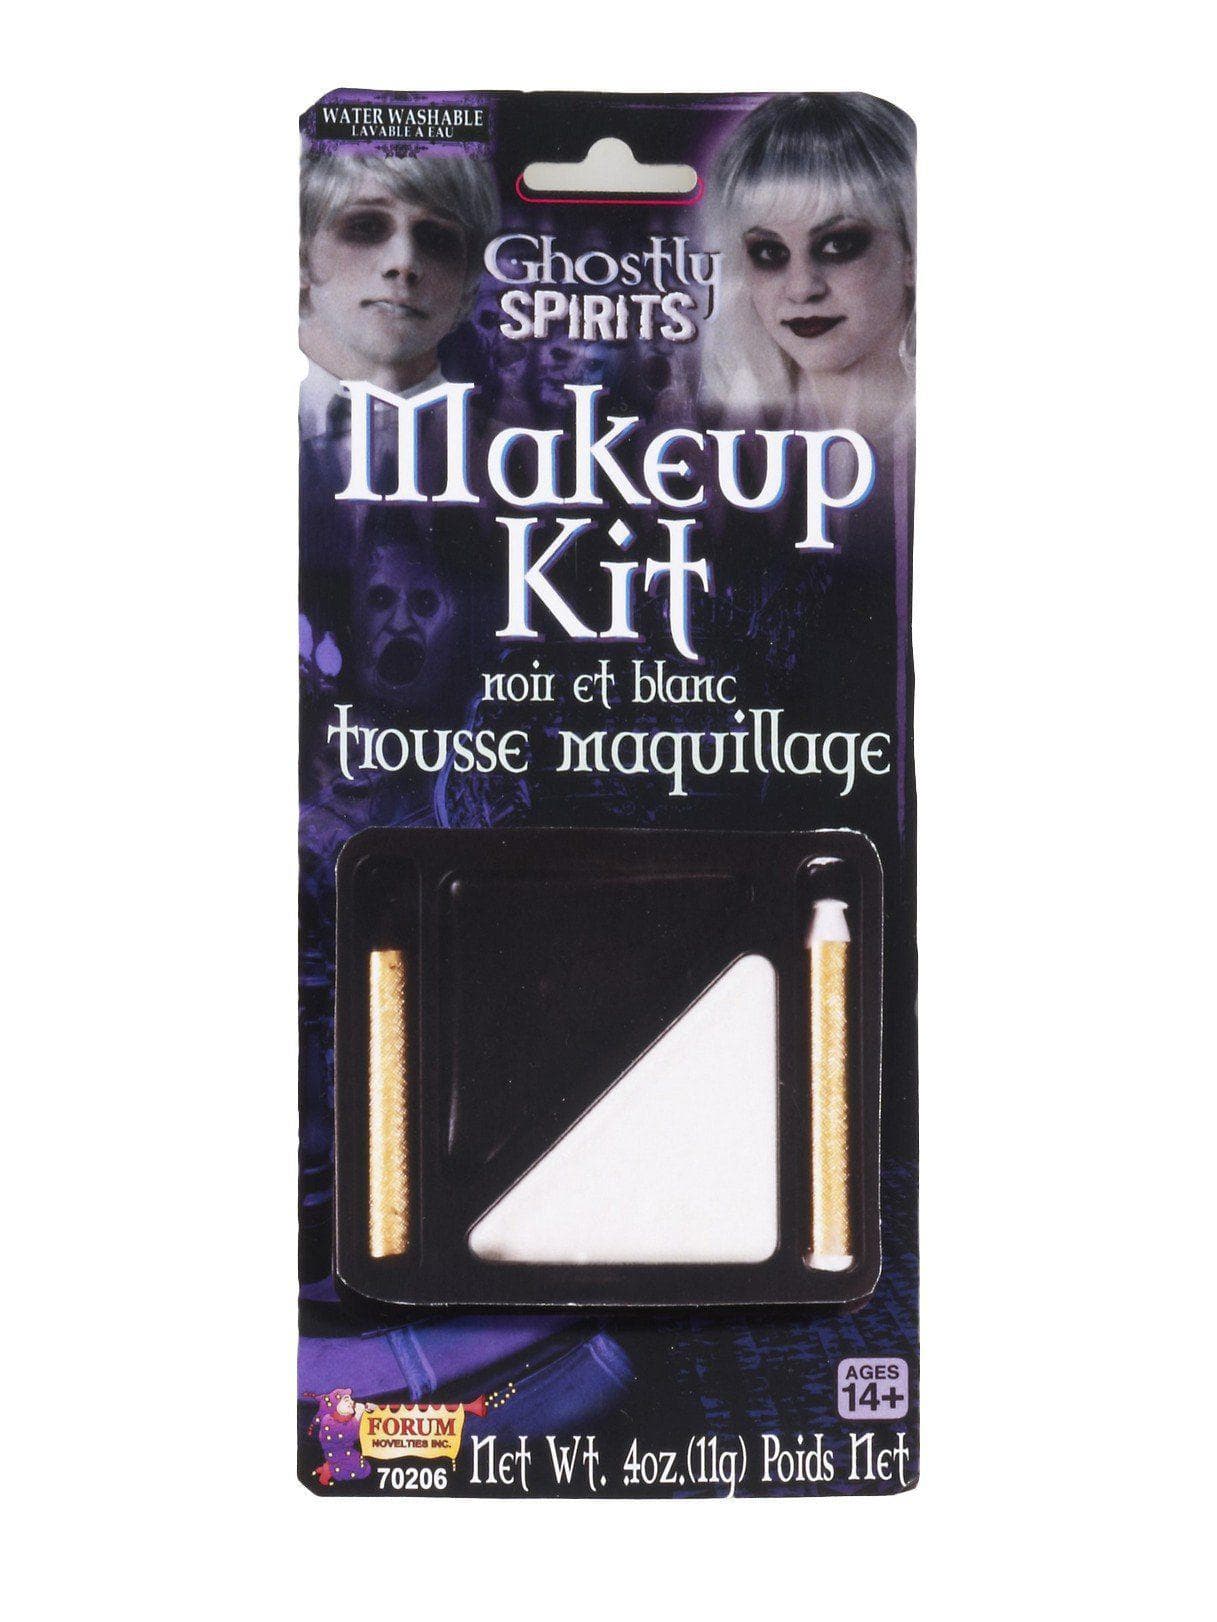 Makeup Ghost Kit - costumes.com